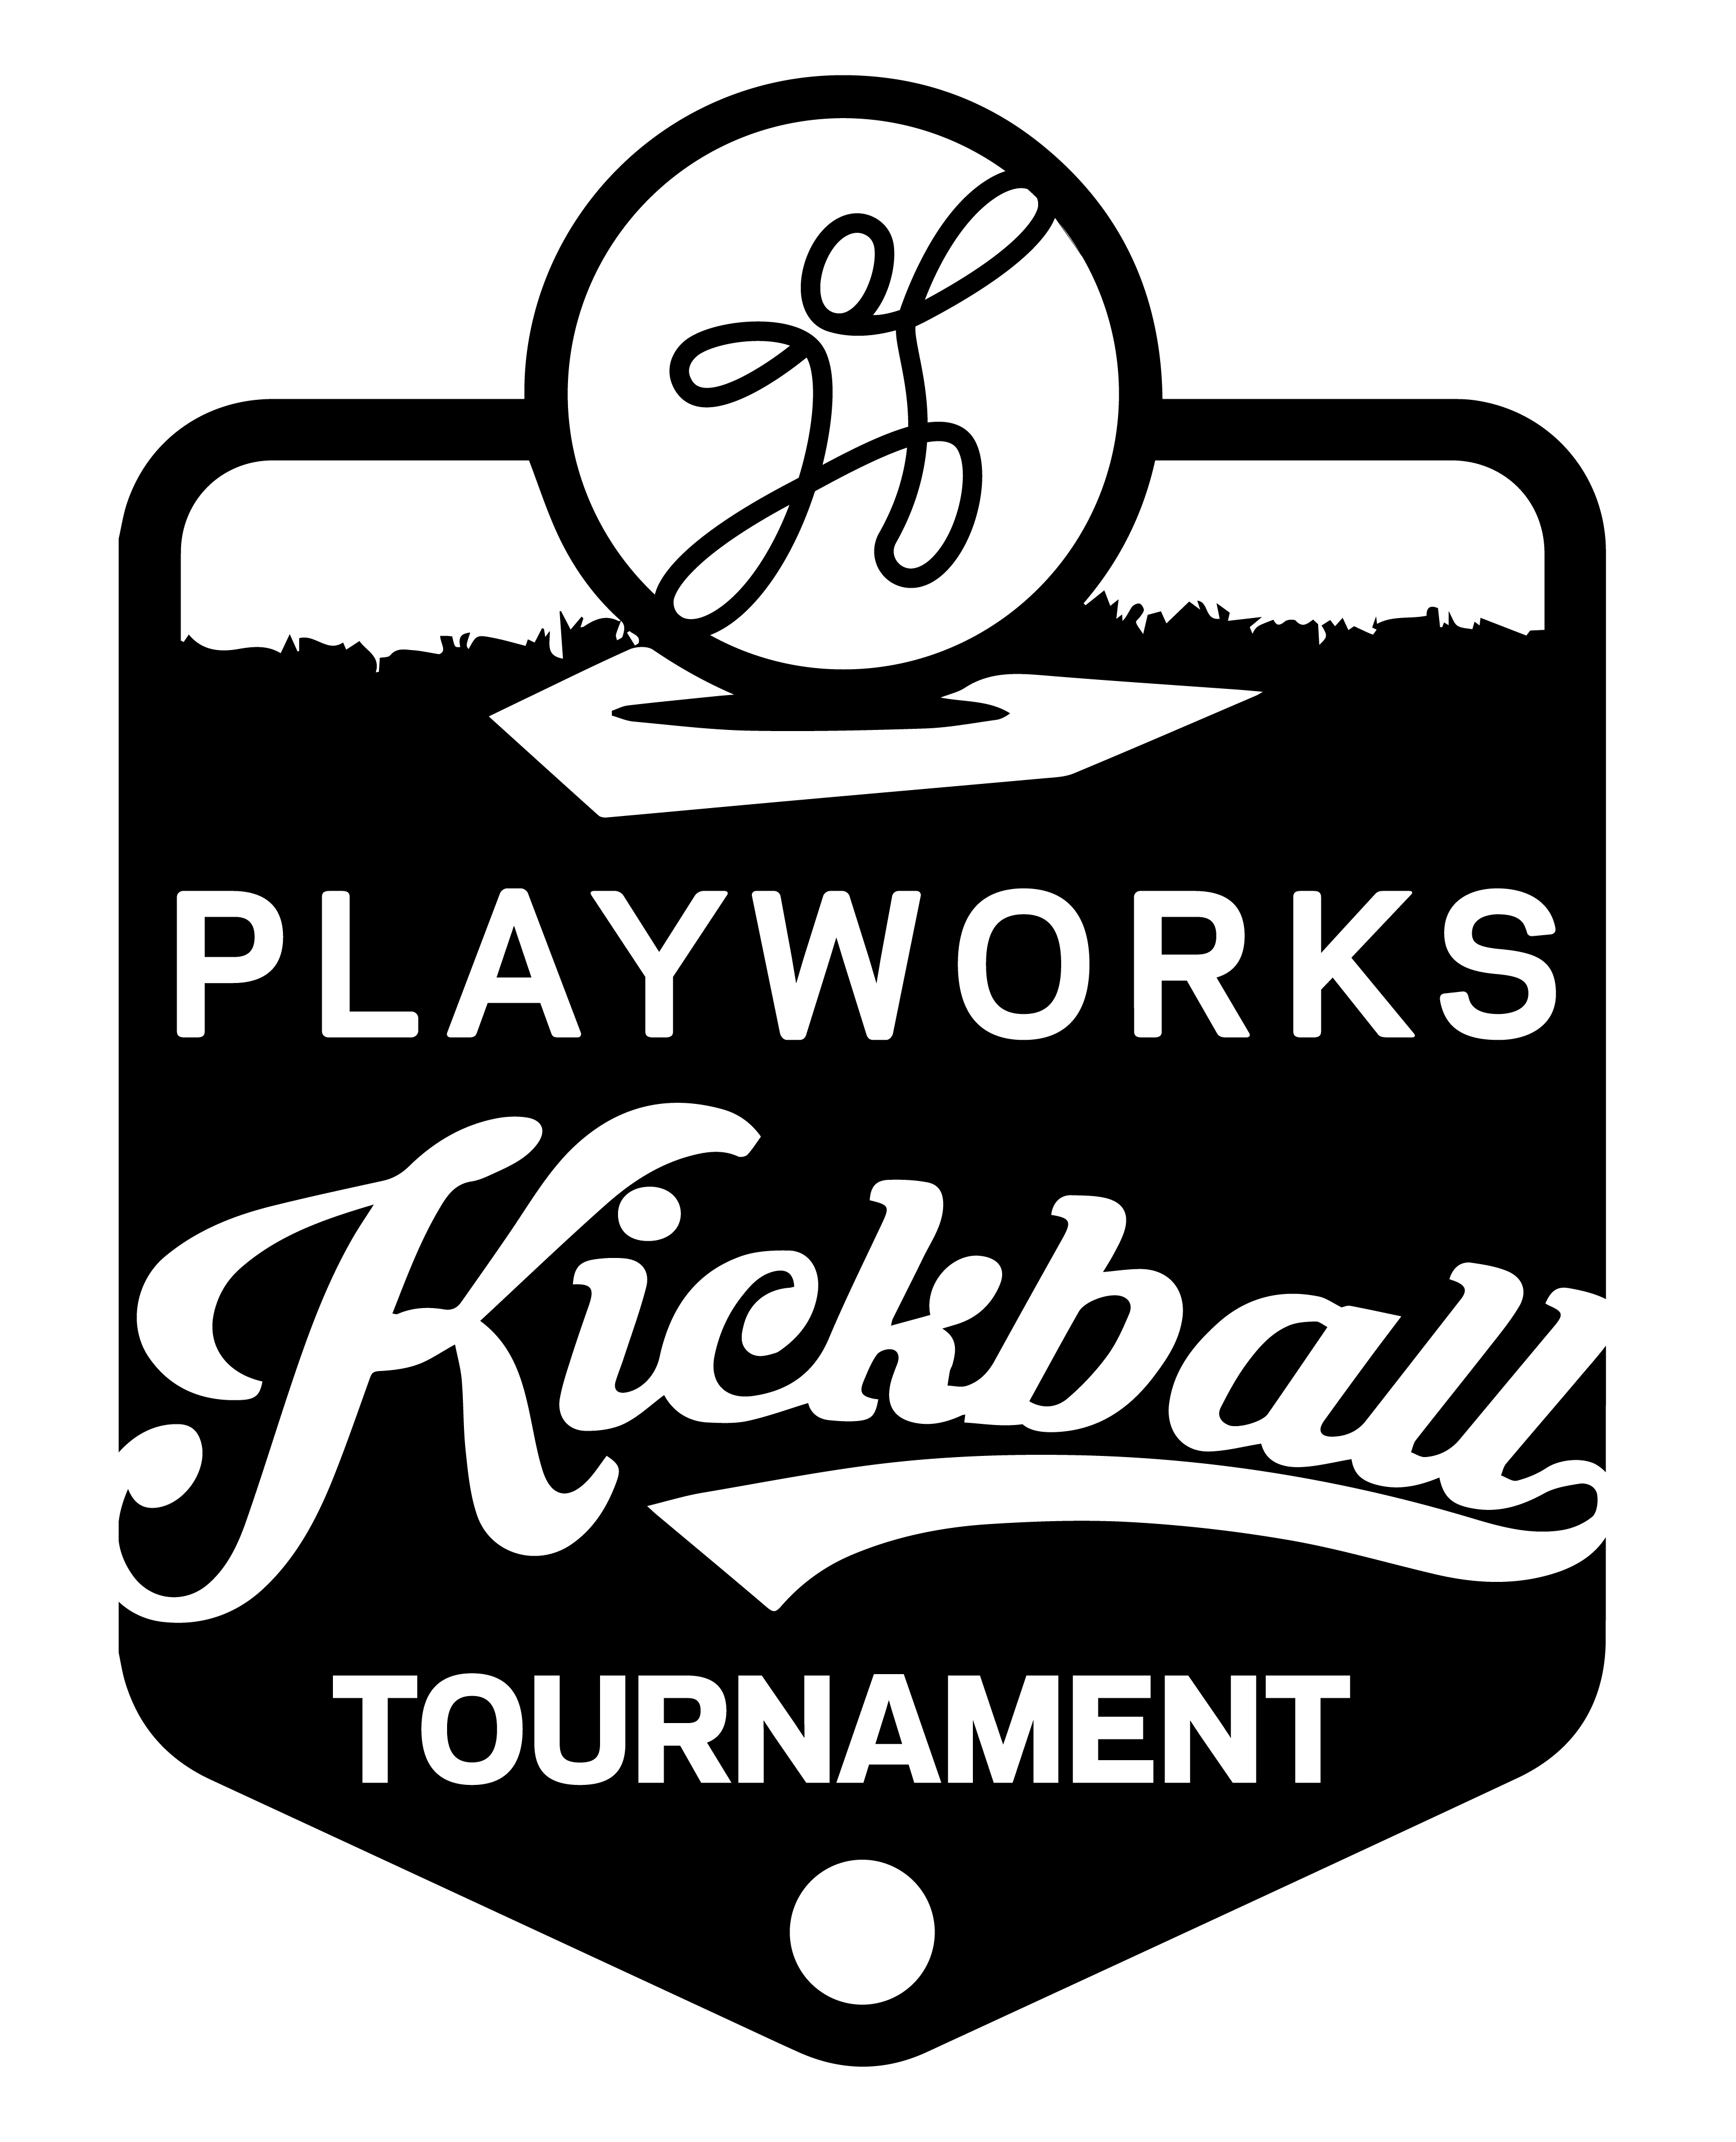 Kickball Logo - 3rd Annual Corporate Kickball 4 Kids Tournament - North Carolina